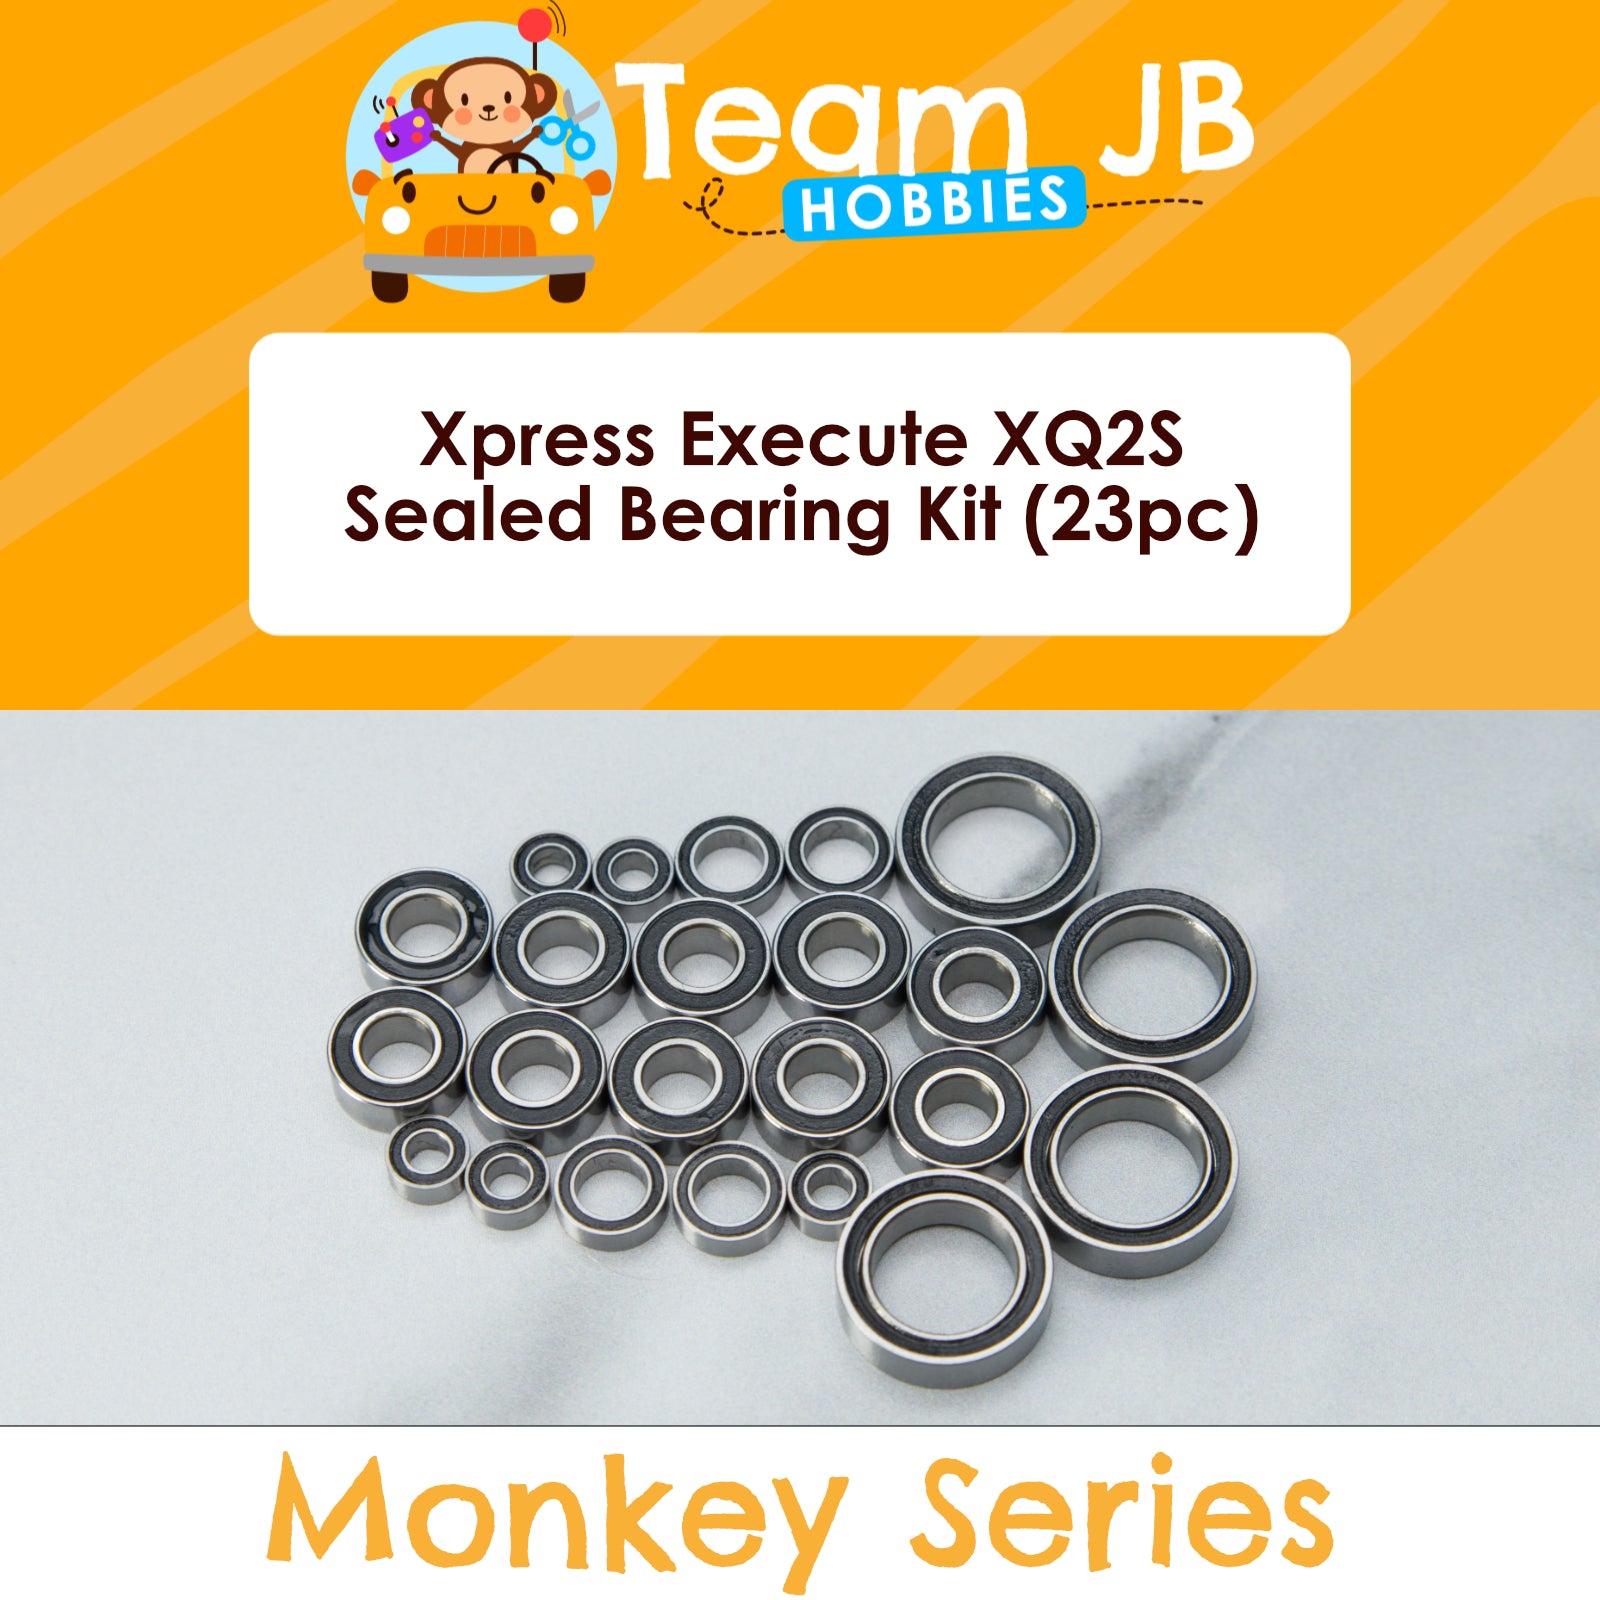 Xpress Execute XQ2S - Sealed Bearing Kit